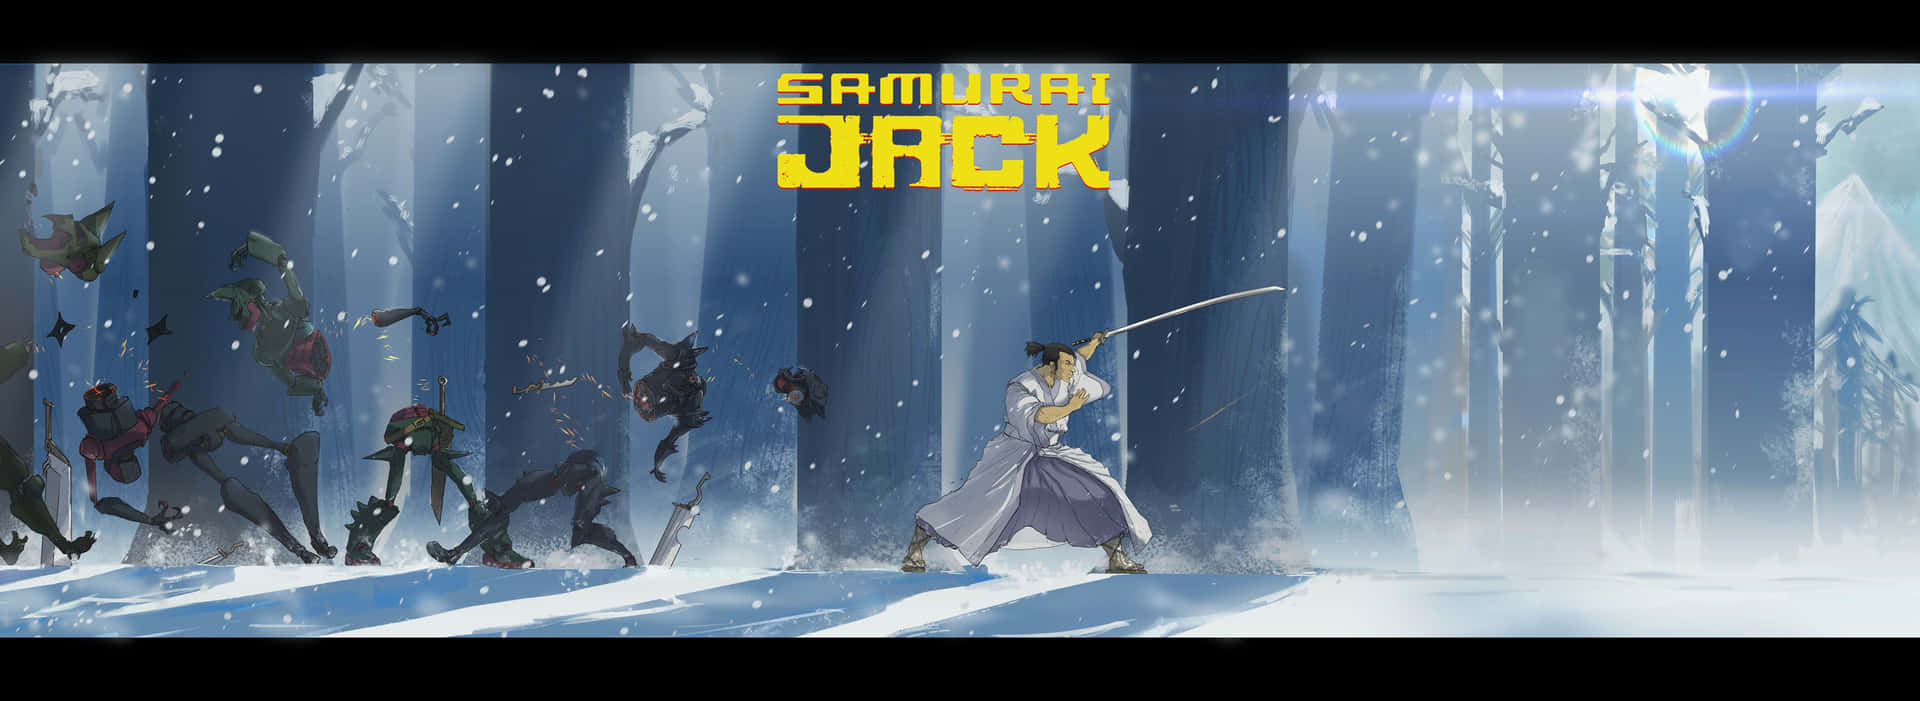 Samurai Jack in a vibrant, action-packed scene